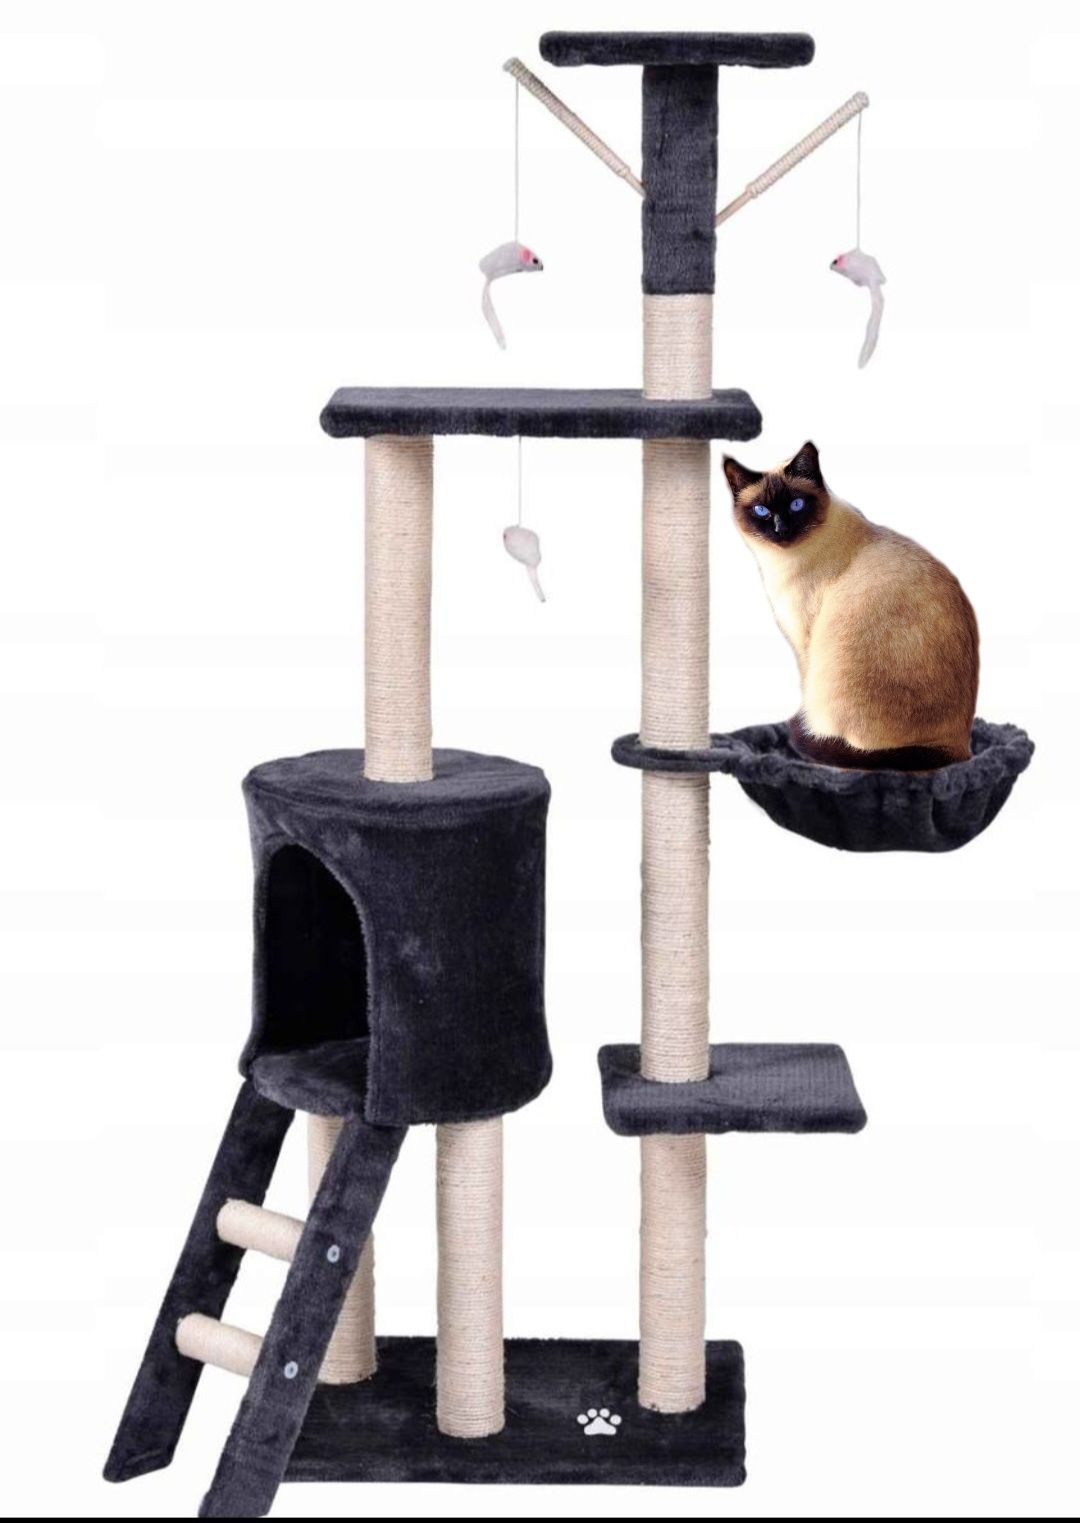 !!HIT!! Drapak legowisko domek wieża dla kota do domu +GRATIS